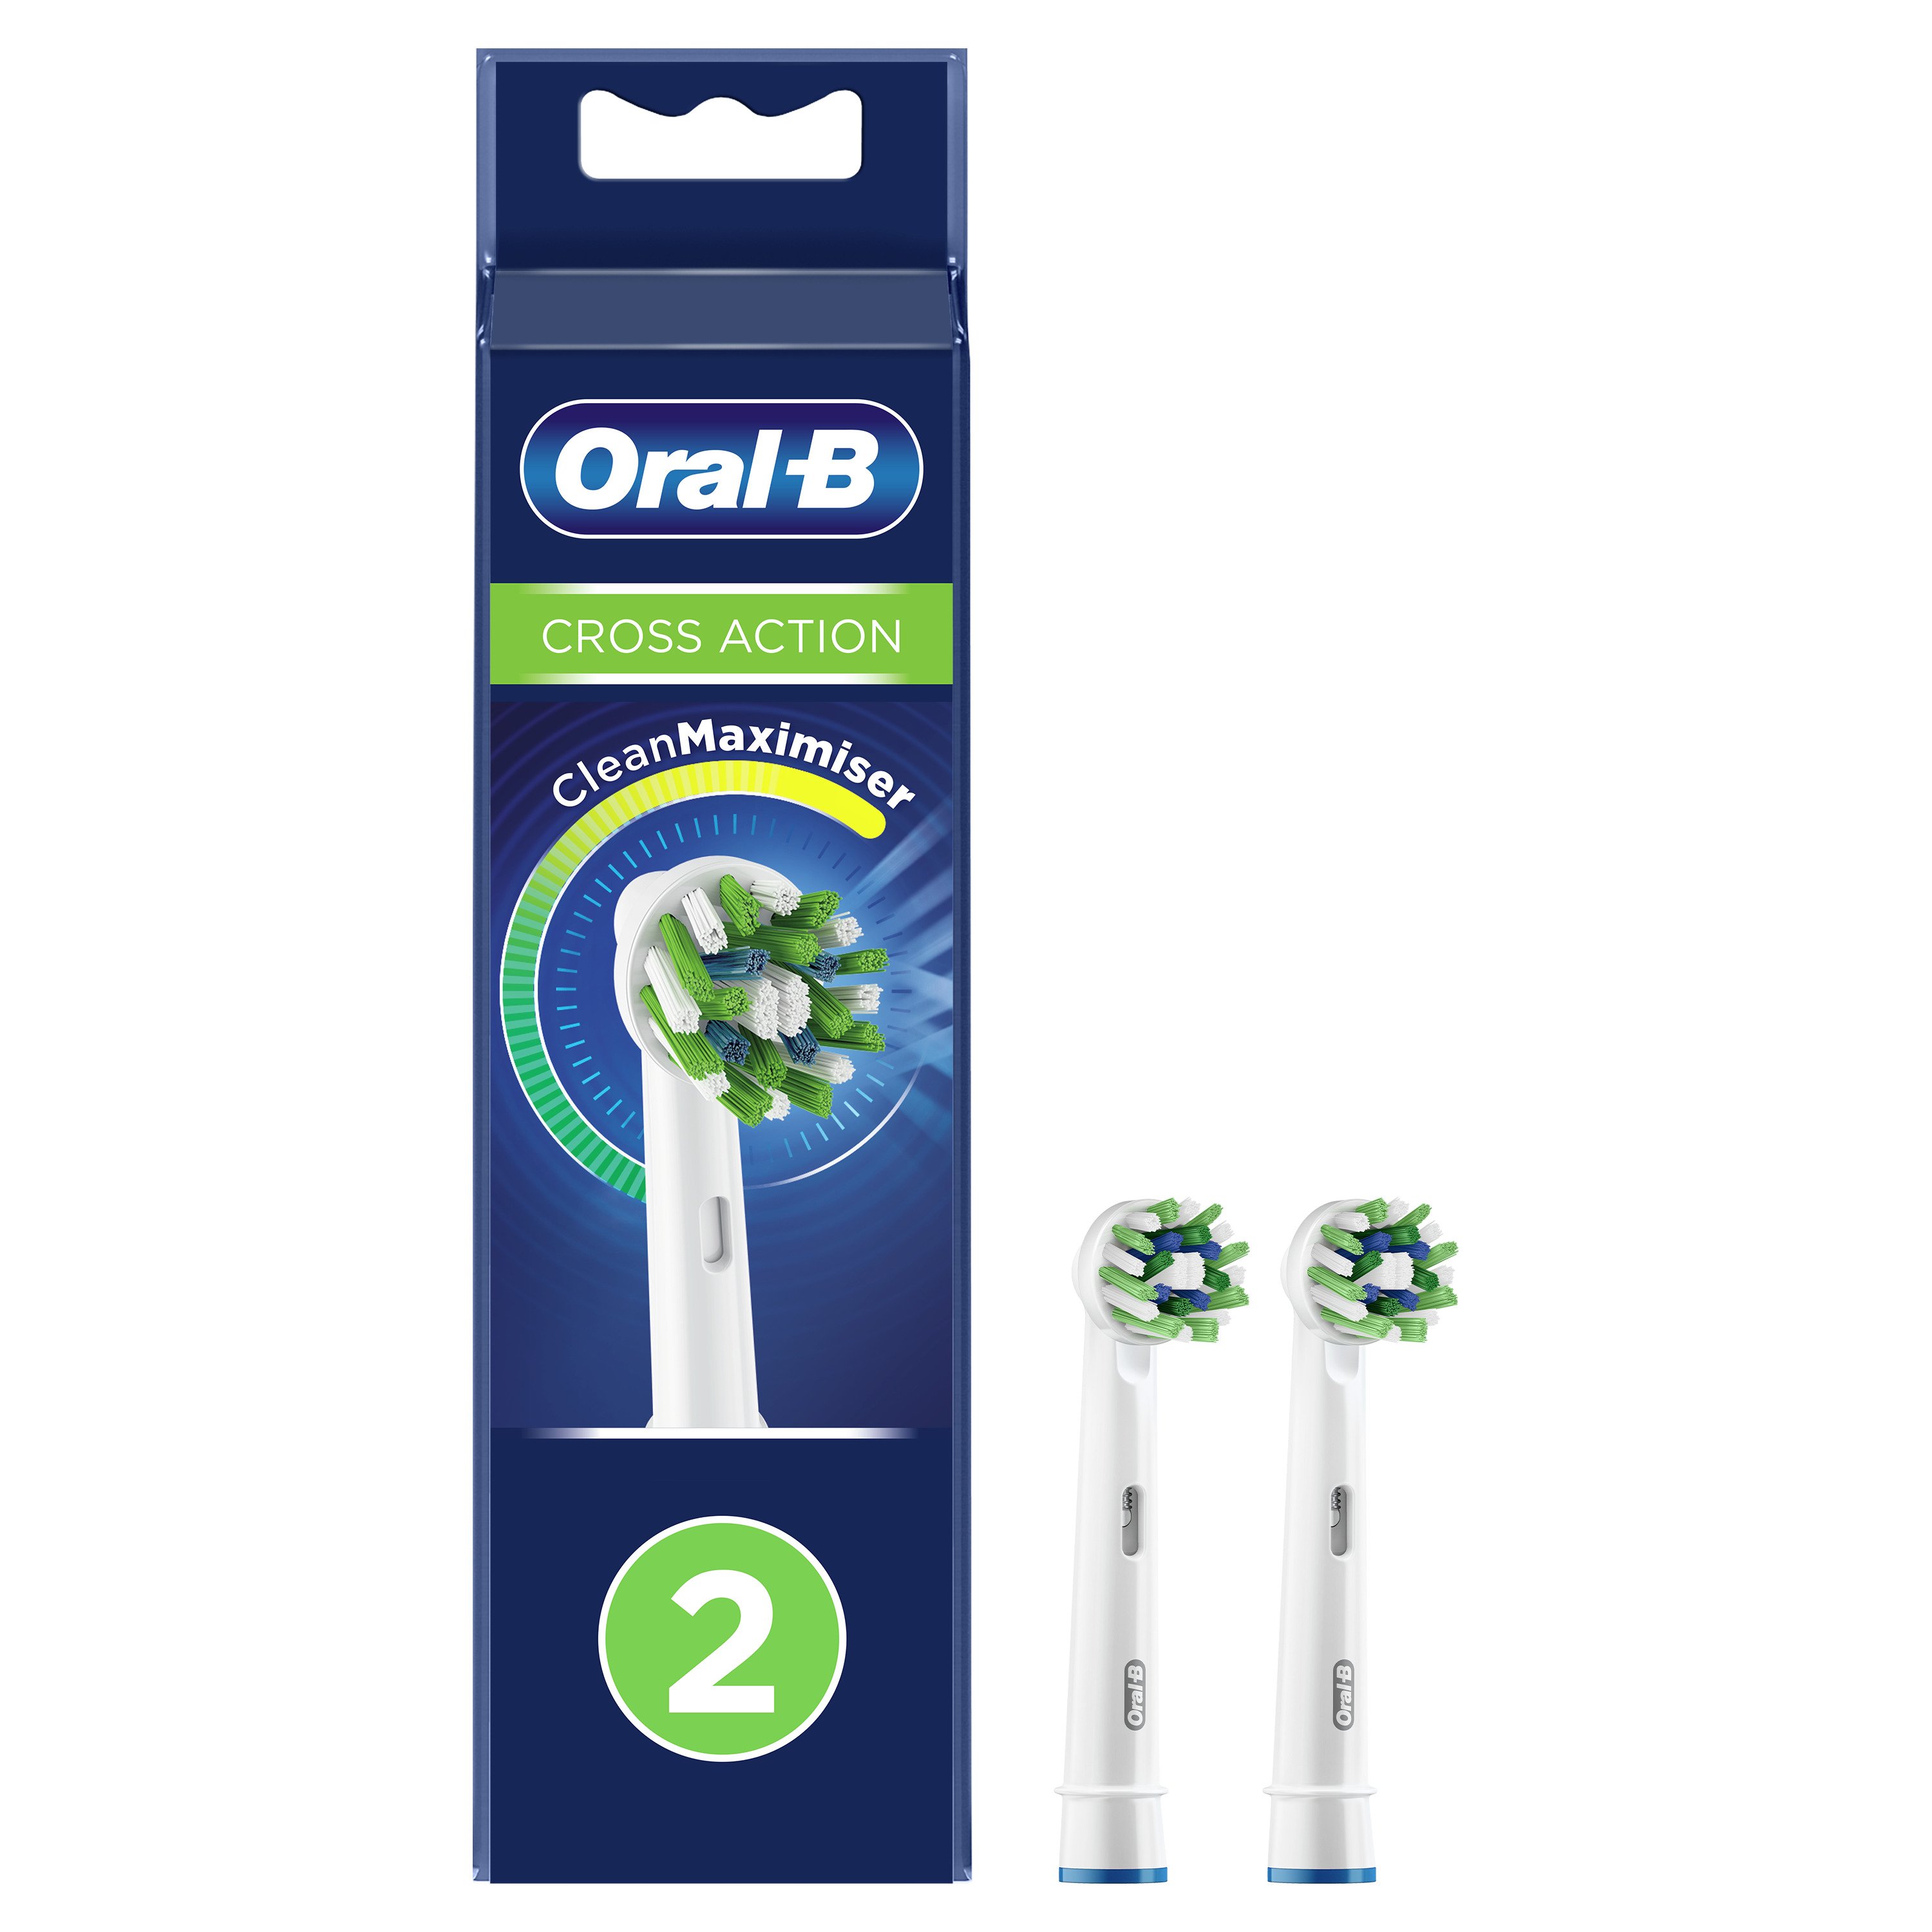 Насадка для электрической зубной щетки Braun Oral-B EB50RB-2 Cross Action насадка для электрической зубной щетки oral b cross action cleanmaximiser черная